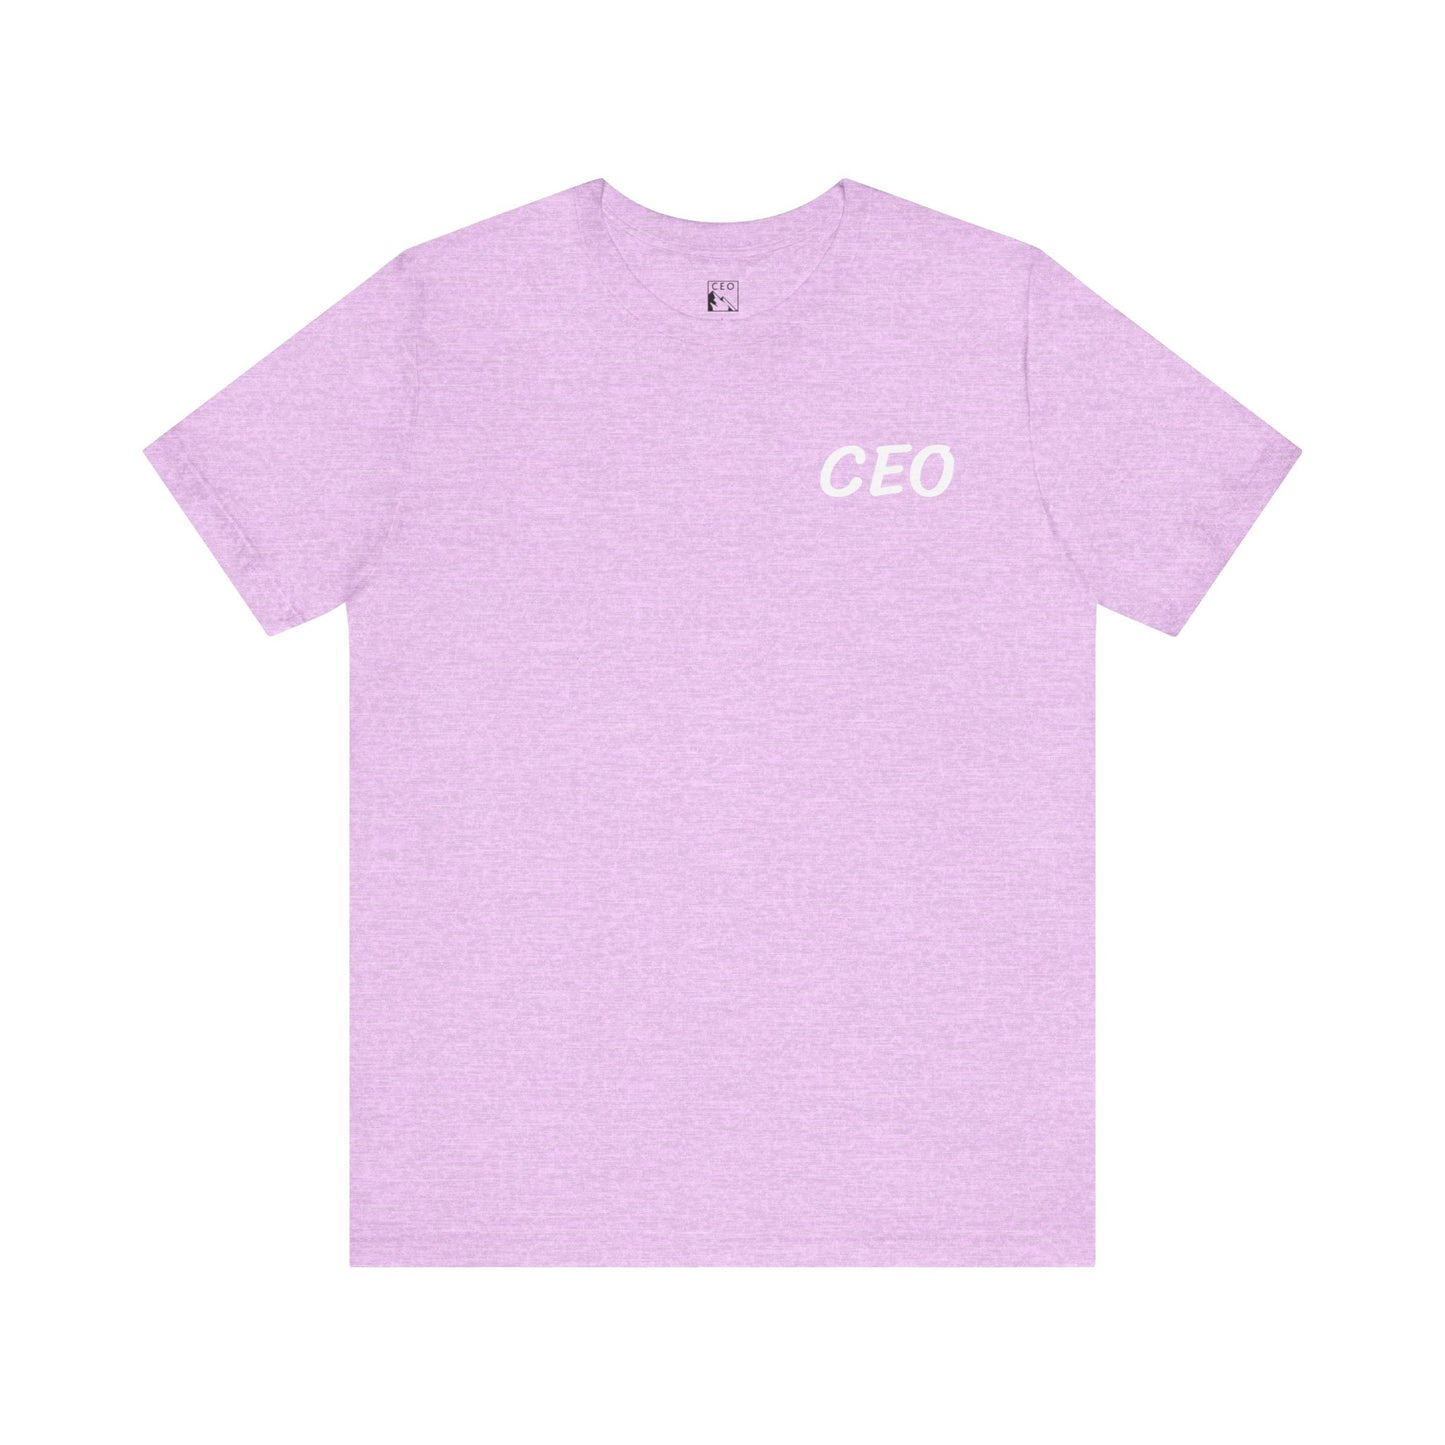 New CEO T-shirts (White Print)